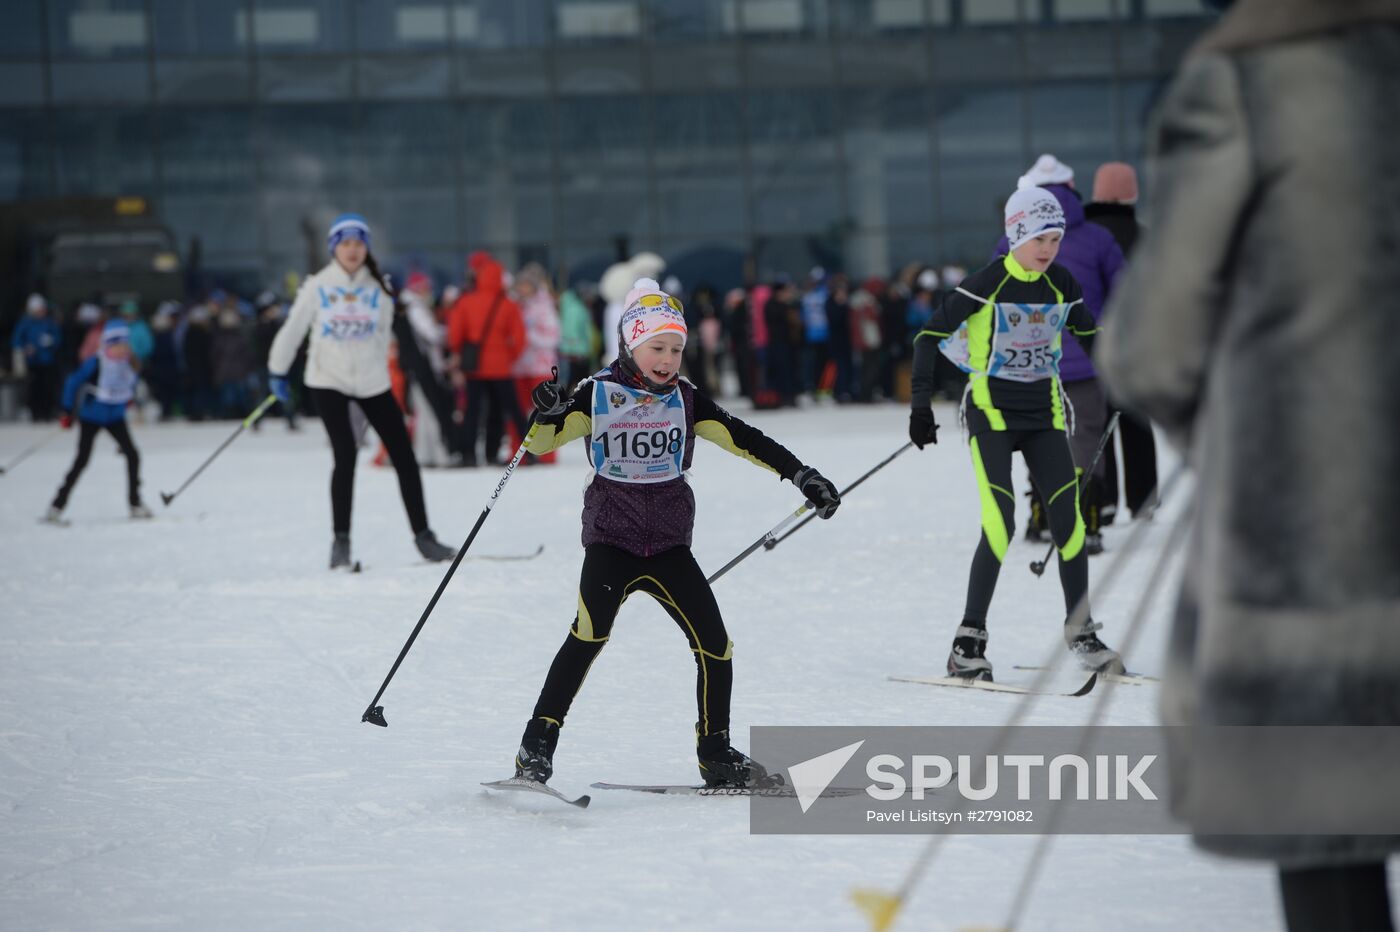 Mass All Russia "Ski Track of Russia 2016" Event